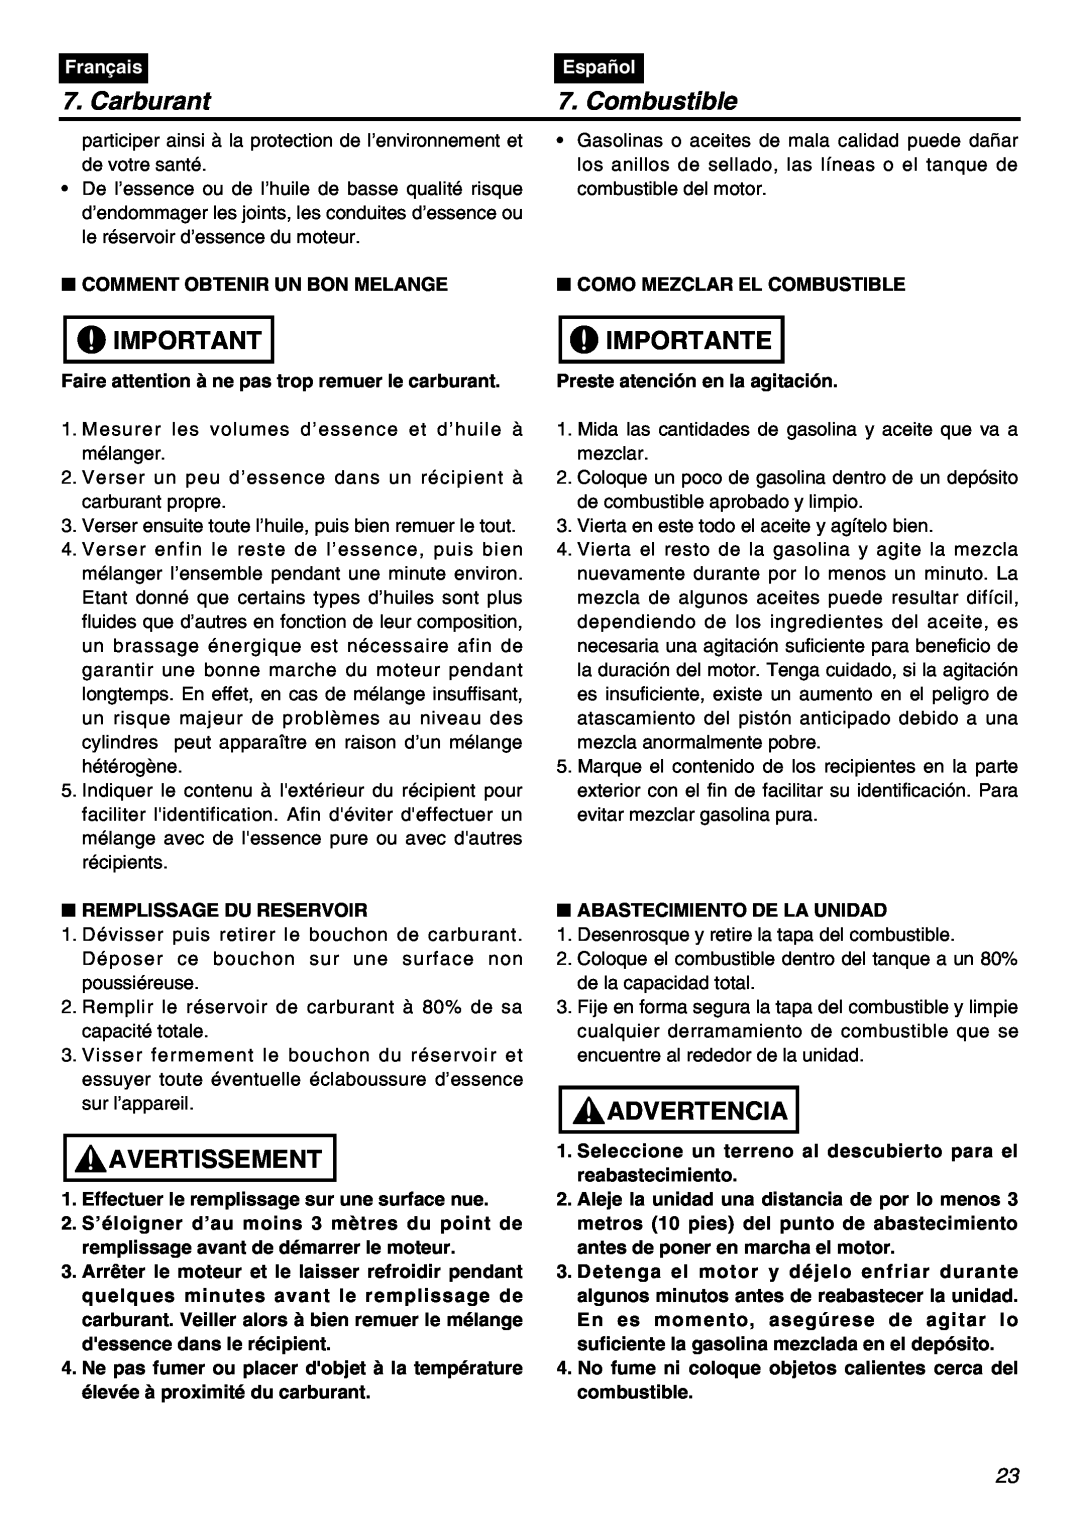 Zenoah HBZ2601-CA manual Carburant, Combustible, Importante, Avertissement, Advertencia, Français, Español 